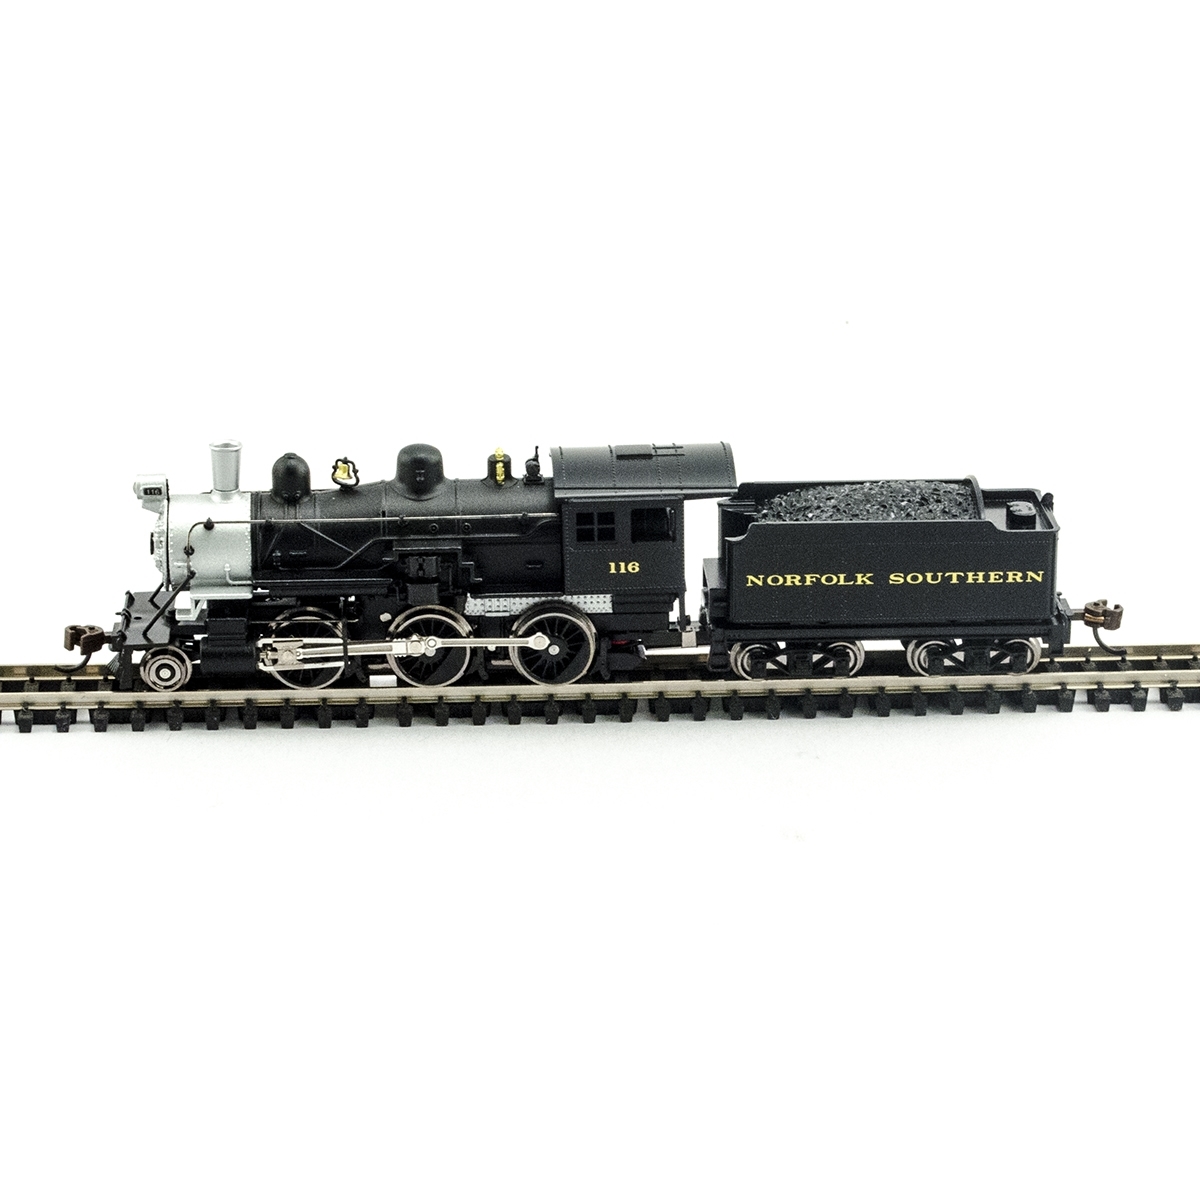 N Scale - Model Power - 87650 - Locomotive, Steam, 2-6-0 Mogul - Norfolk Southern - 116